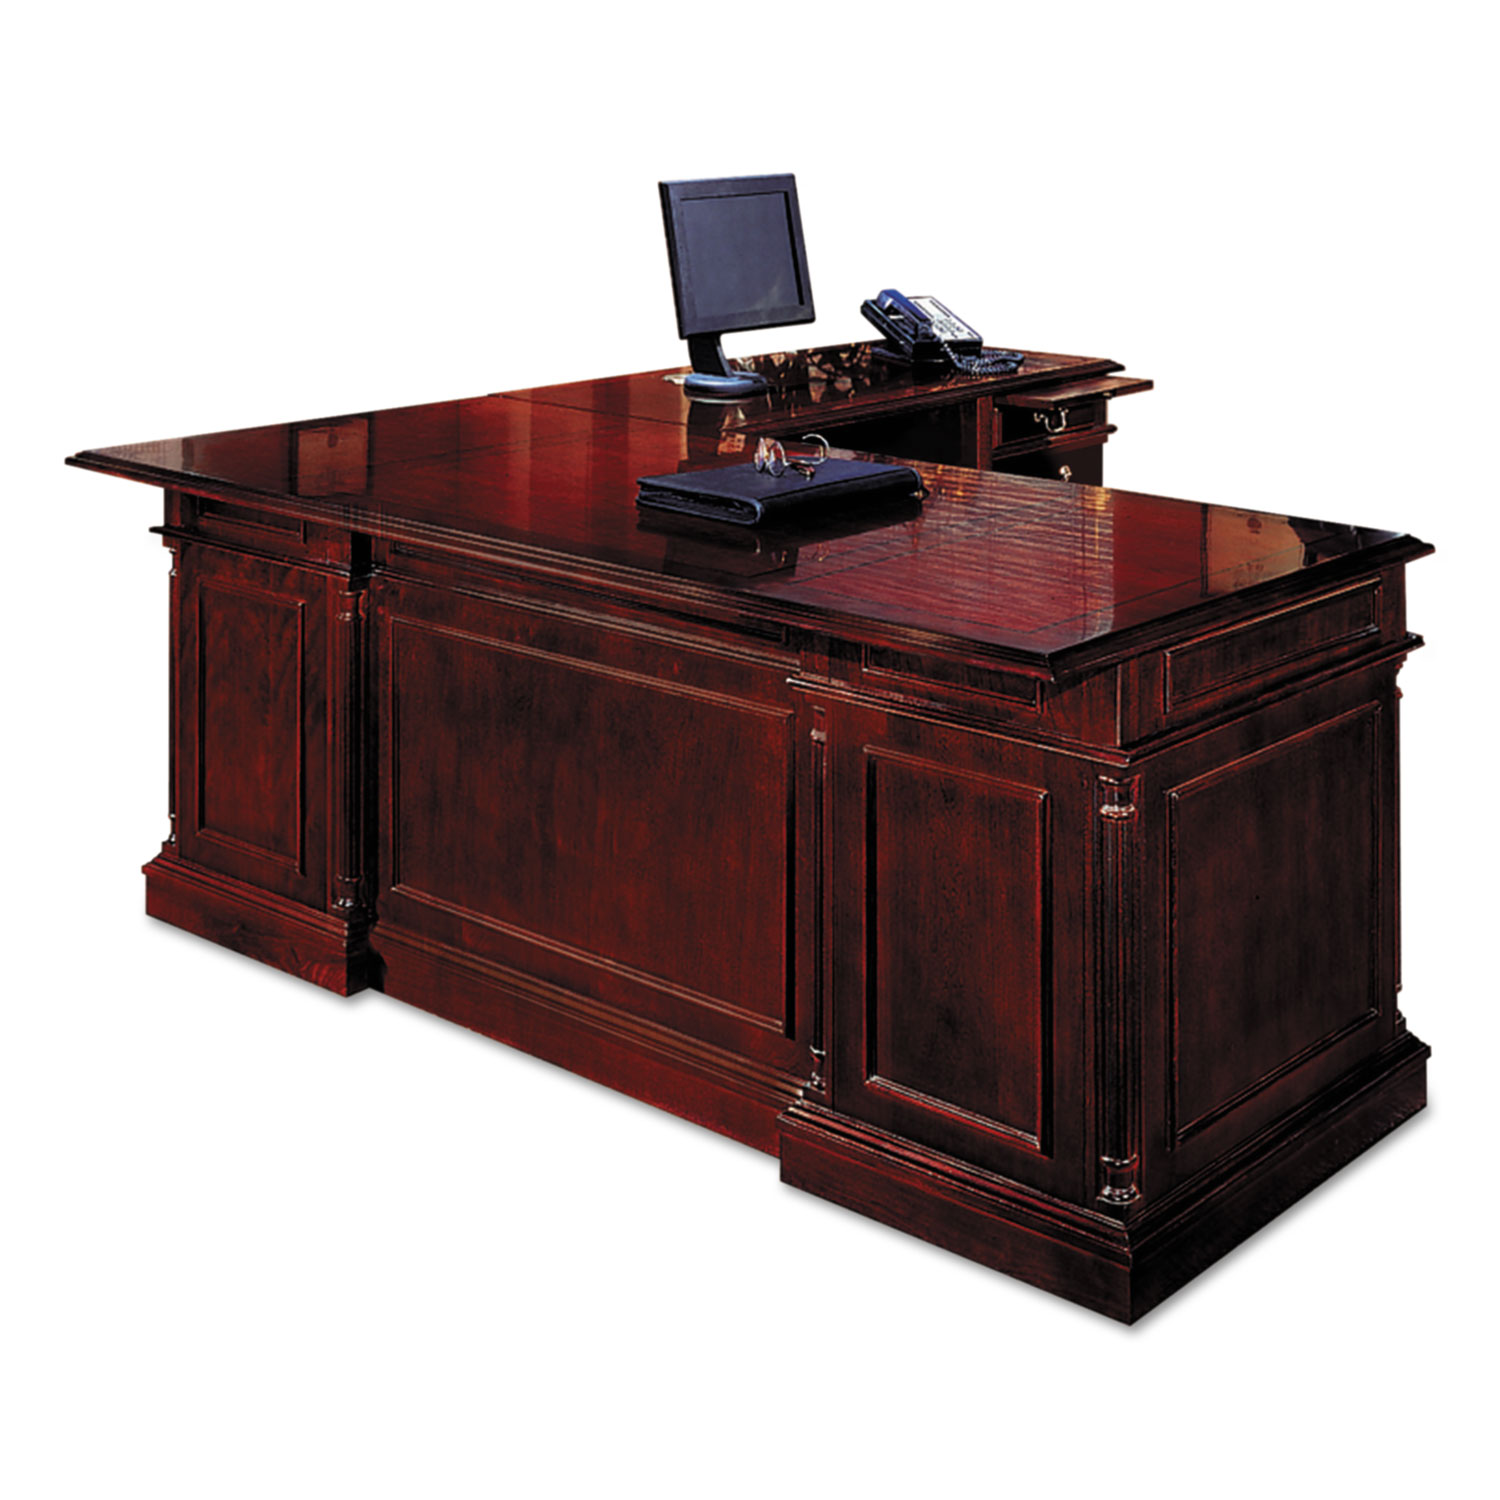  DMi Furniture 40079900570 Keswick Collection Left Pedestal Desk, 72w x 36d x 30h, Cherry (DMI7990570) 